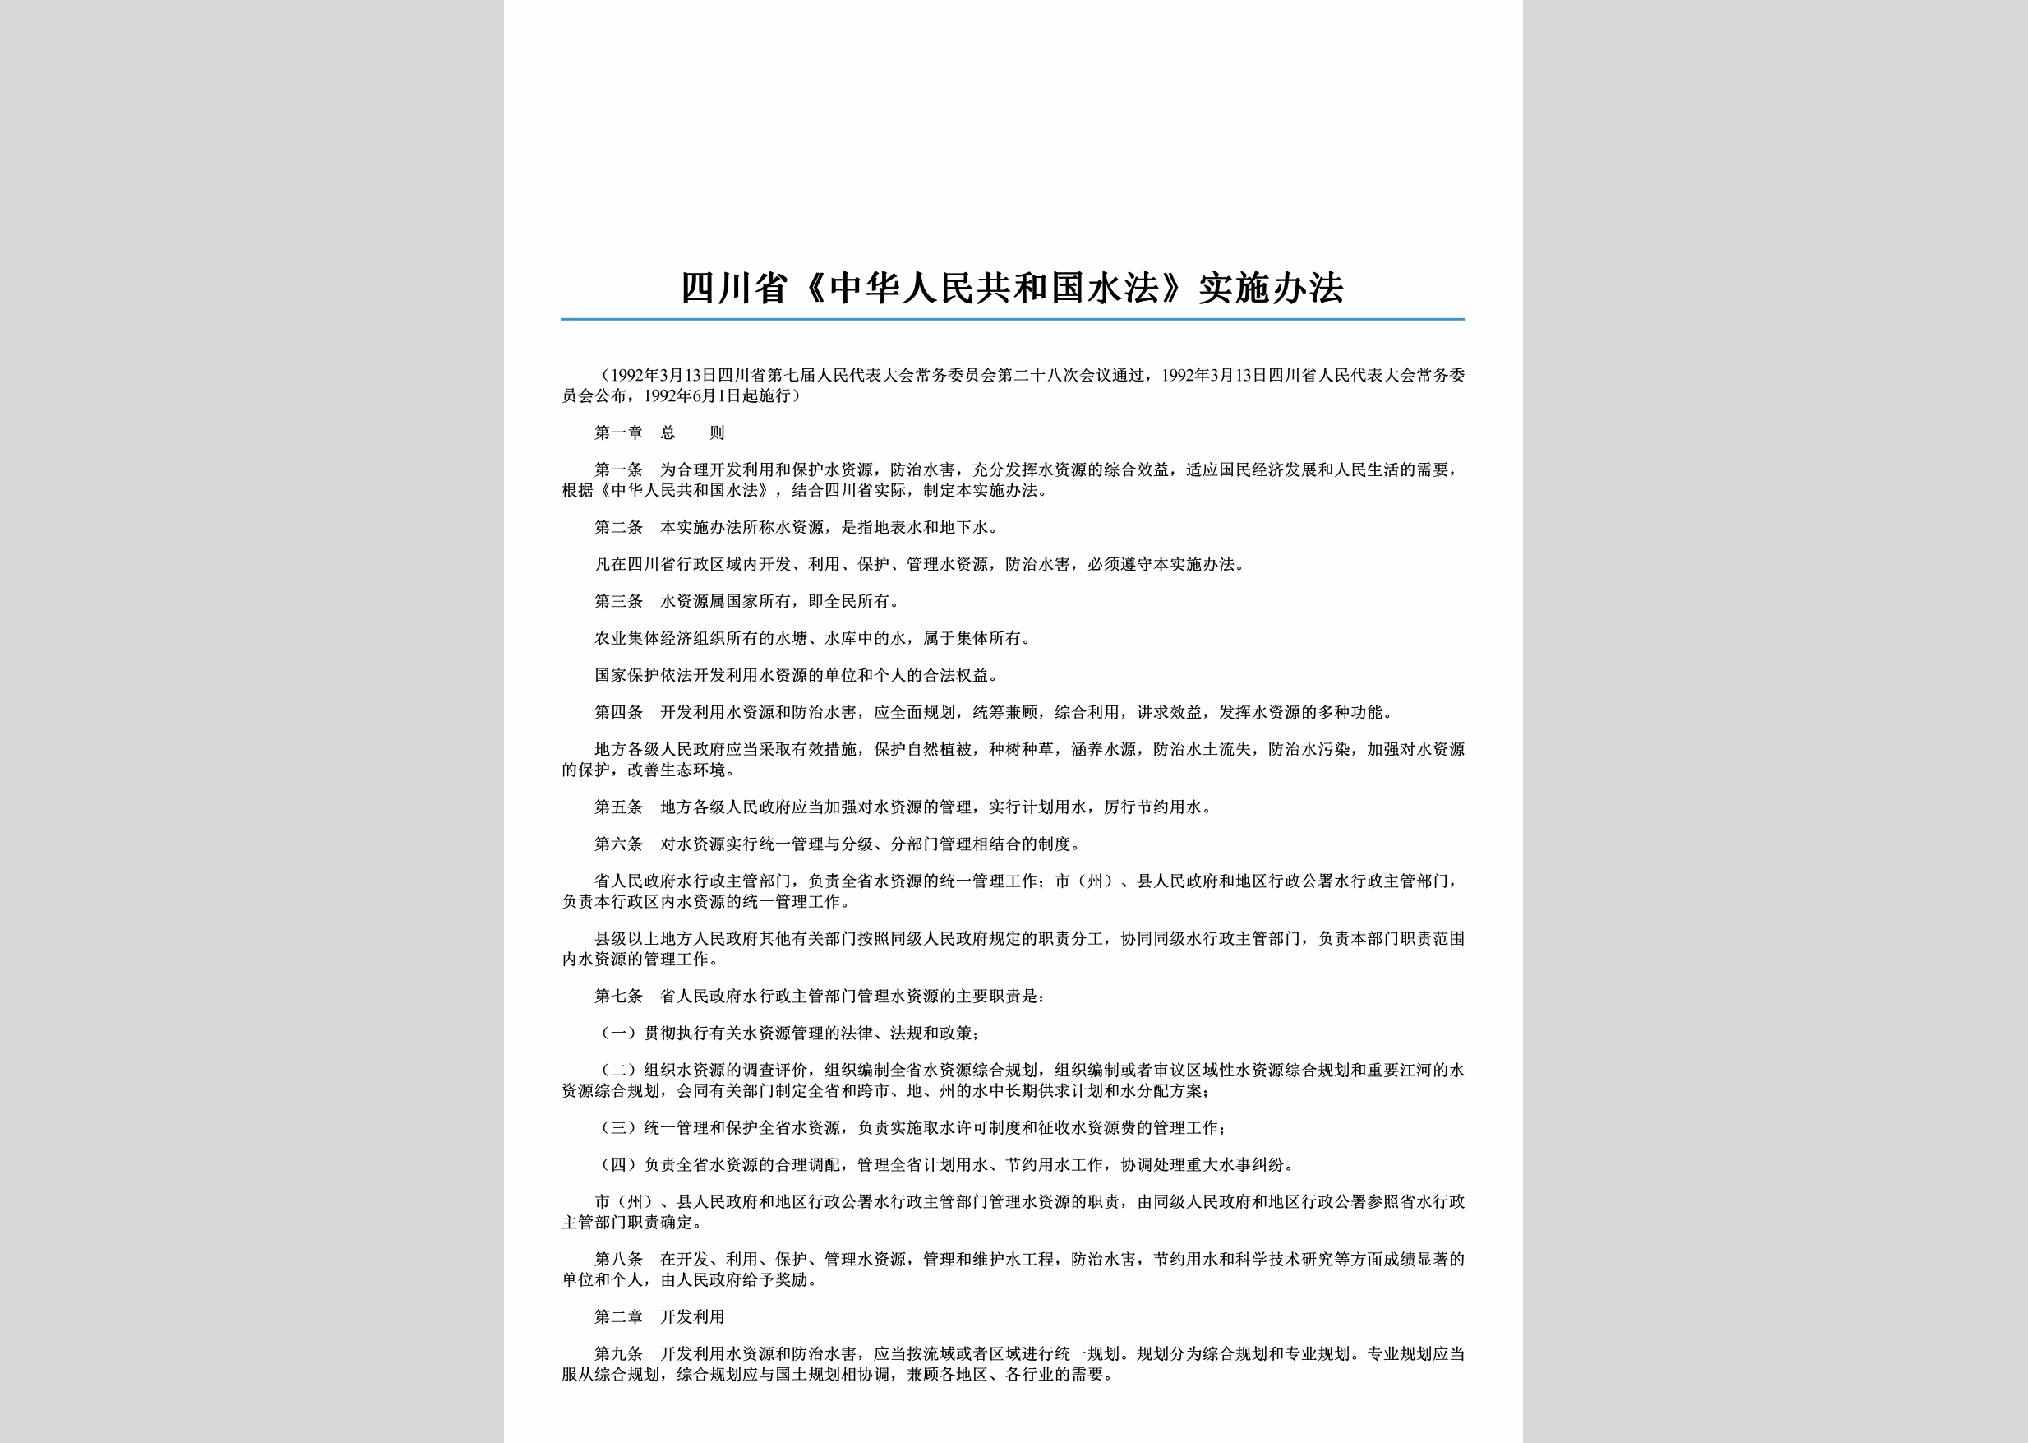 SC-SFSSBF-1992：四川省《中华人民共和国水法》实施办法